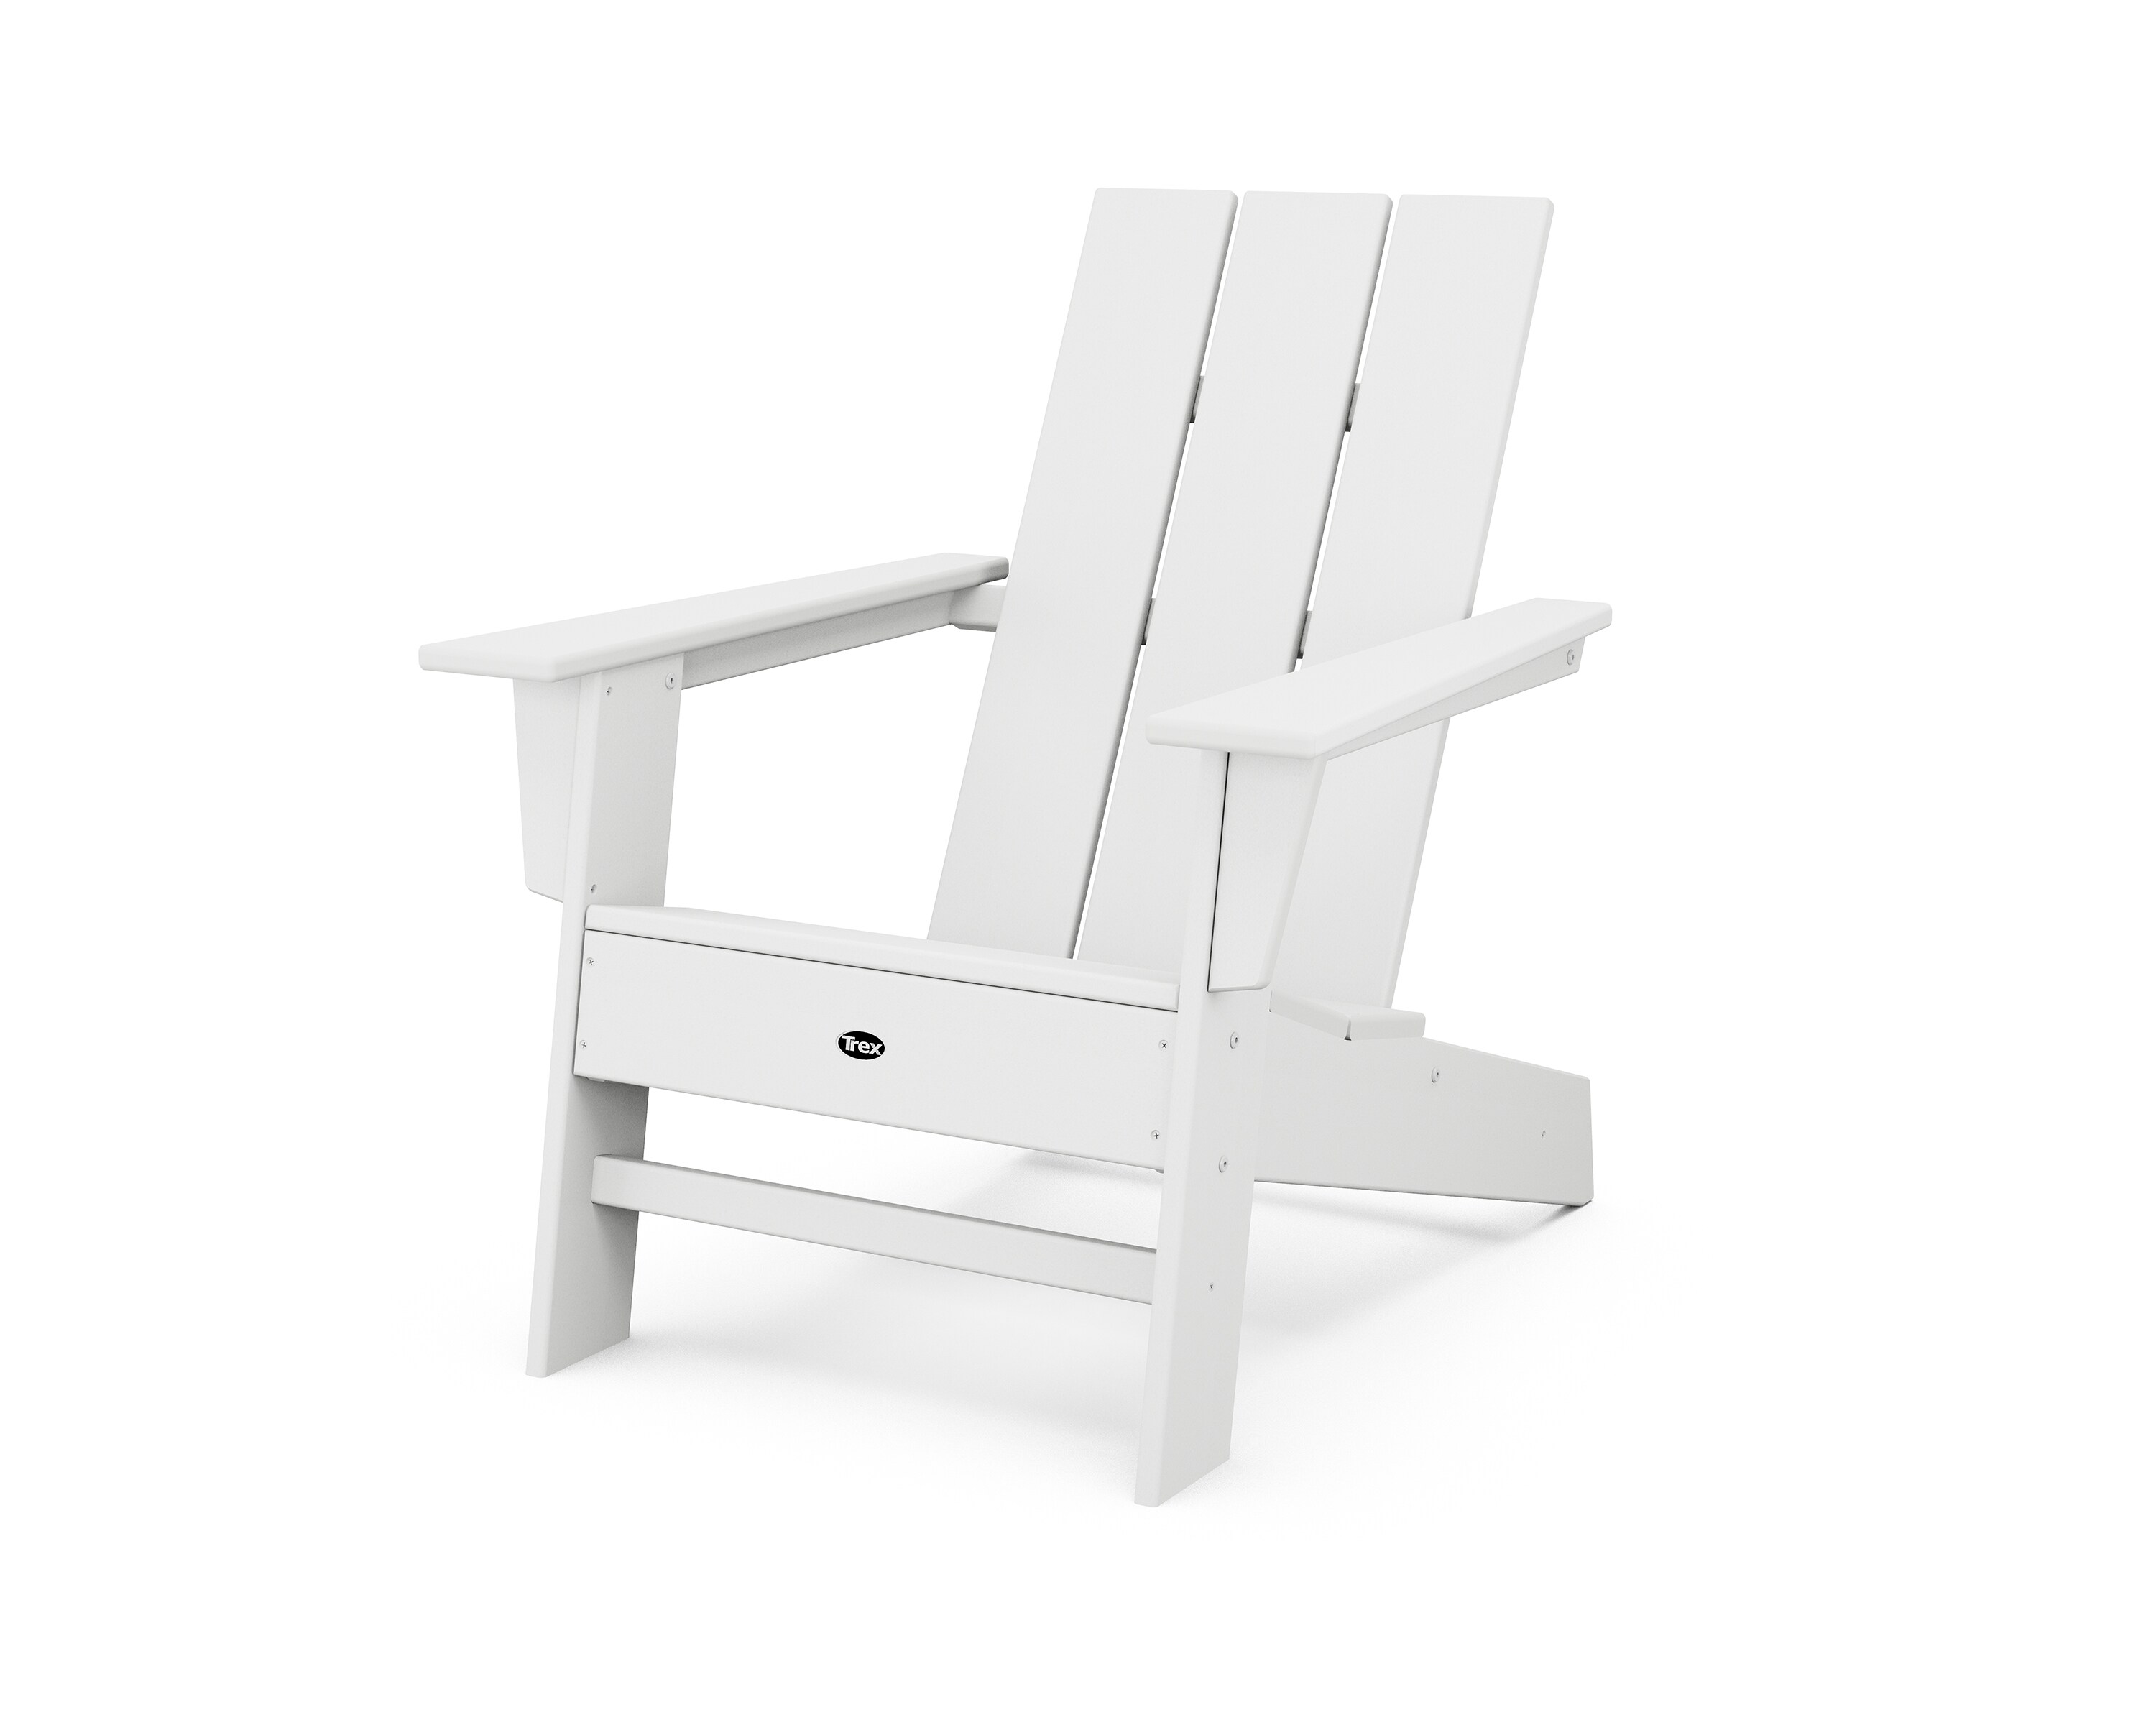 Eastport 15-inch Round Outdoor Bistro Chair Cushion (Set of 4) by